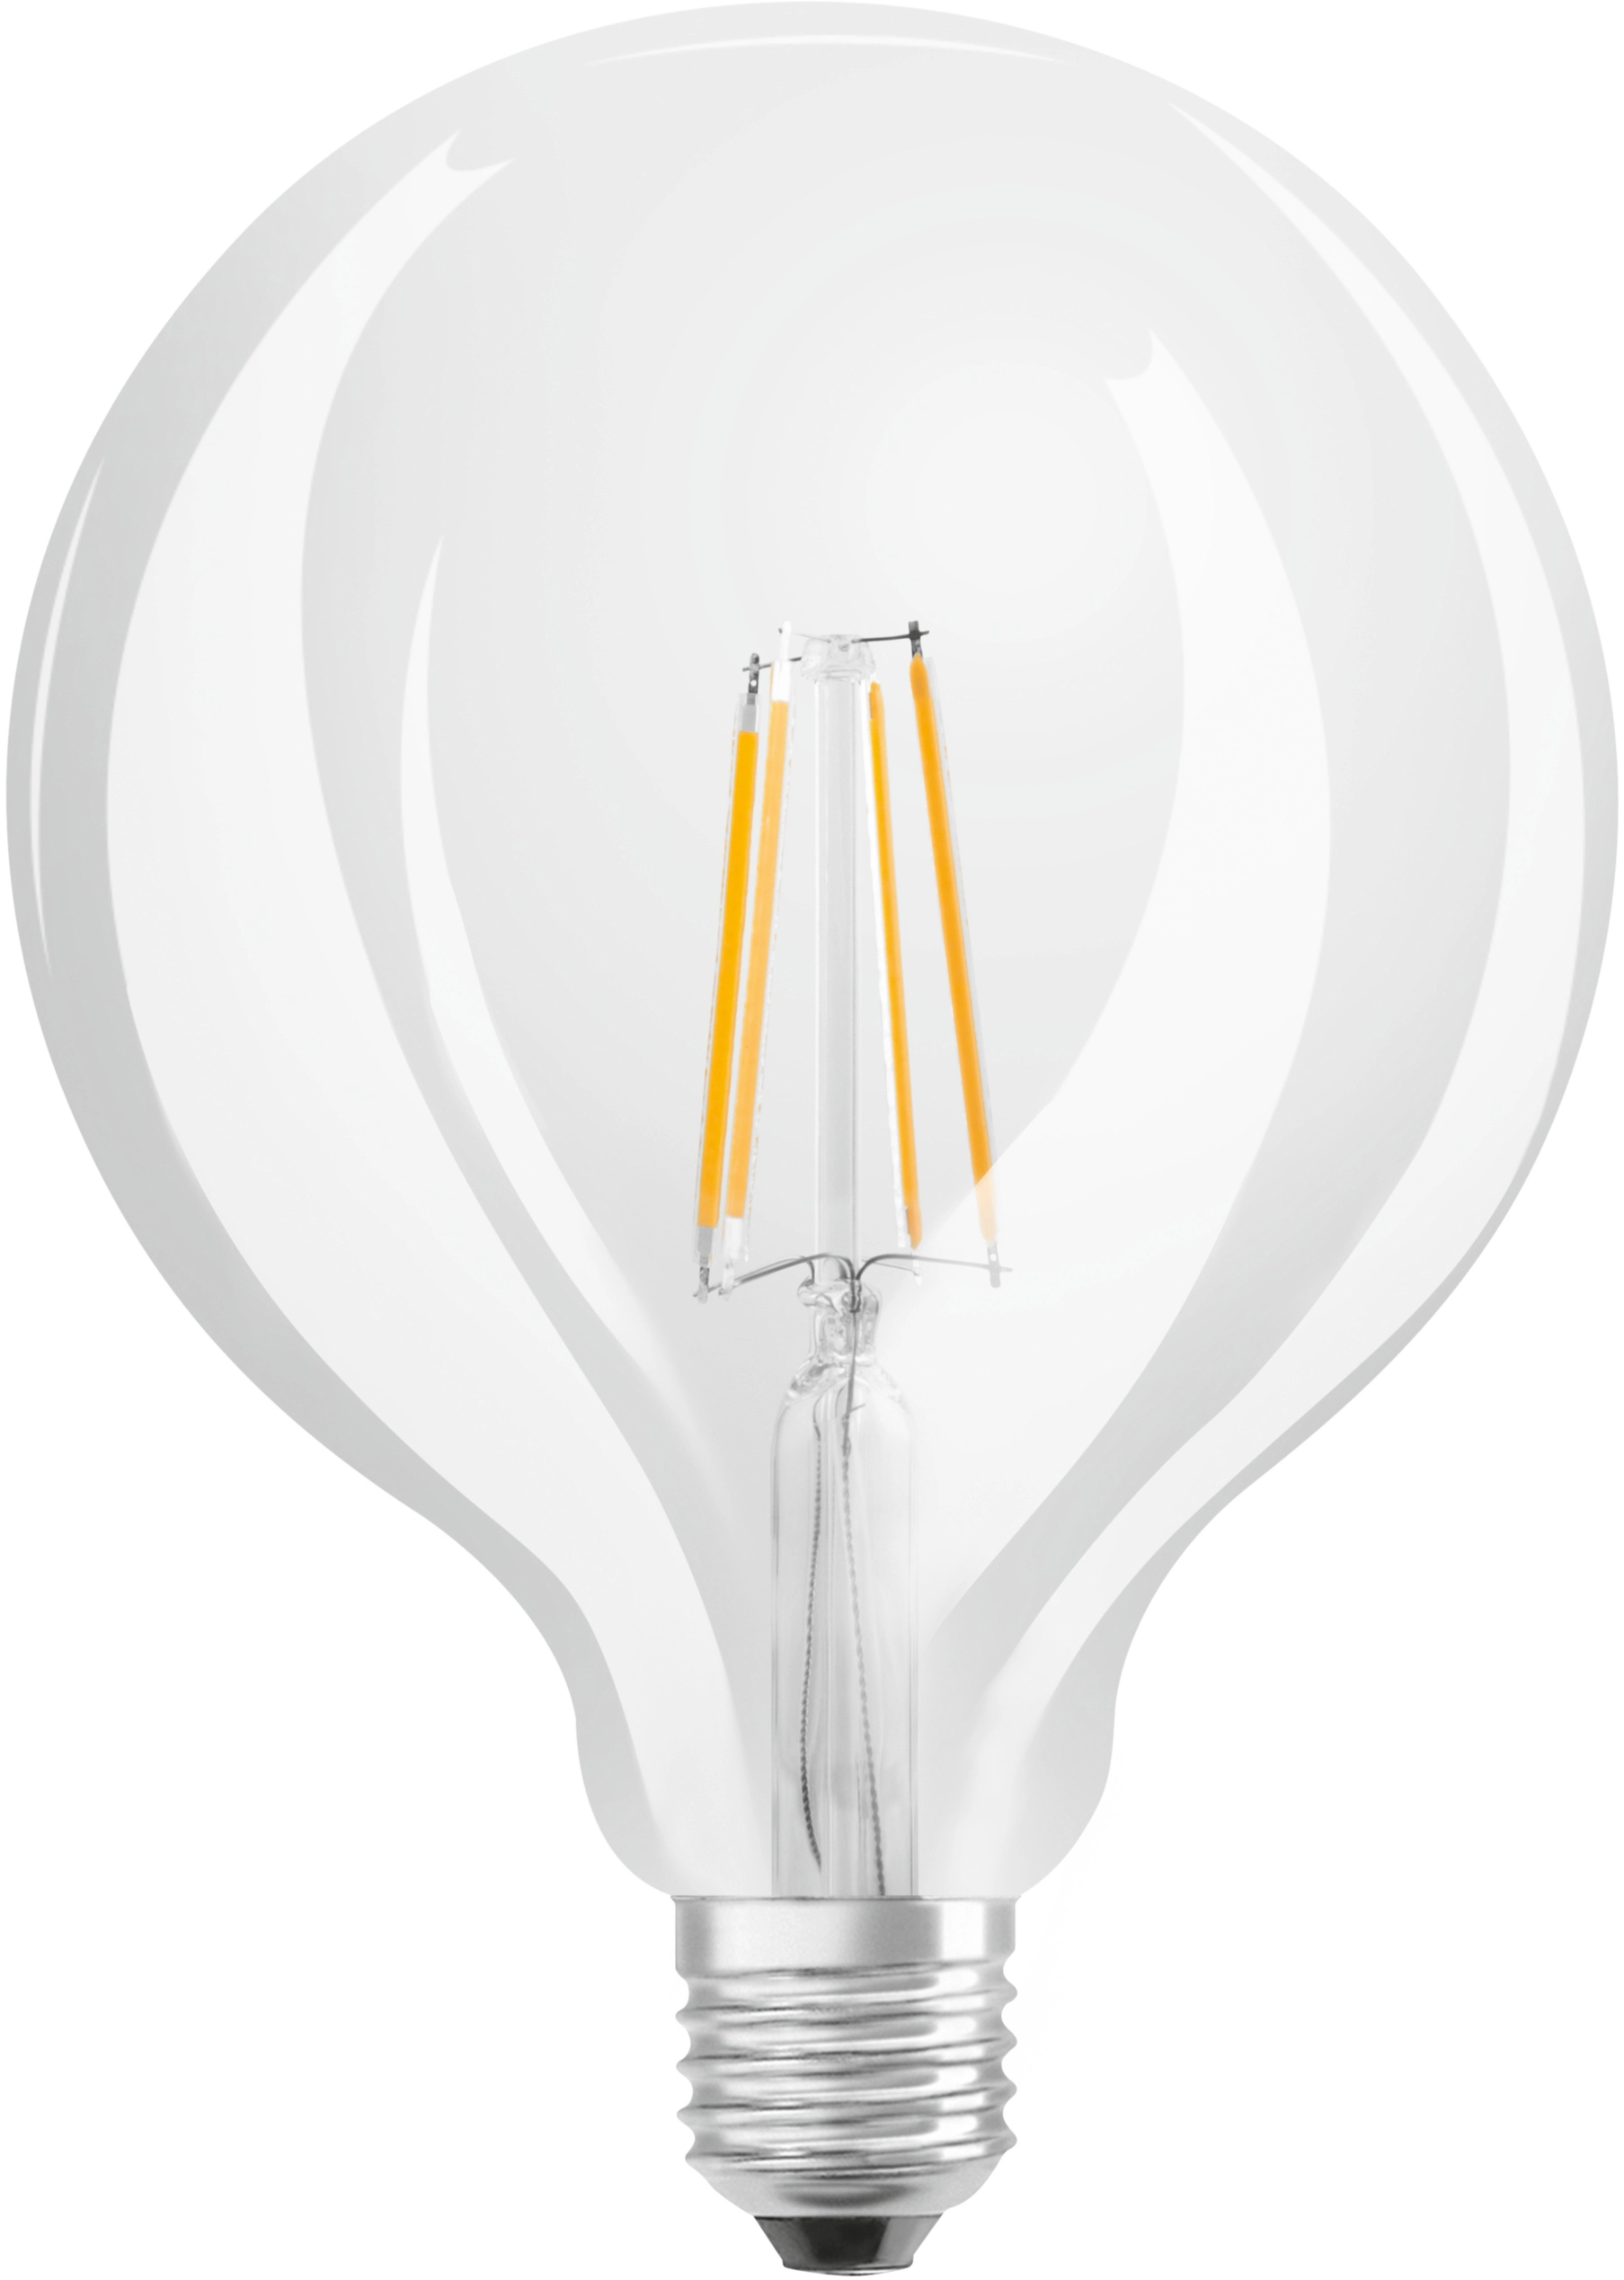 Lampadina LED Retrofit OSRAM tutto vetro globo E27 luce calda 2700 K